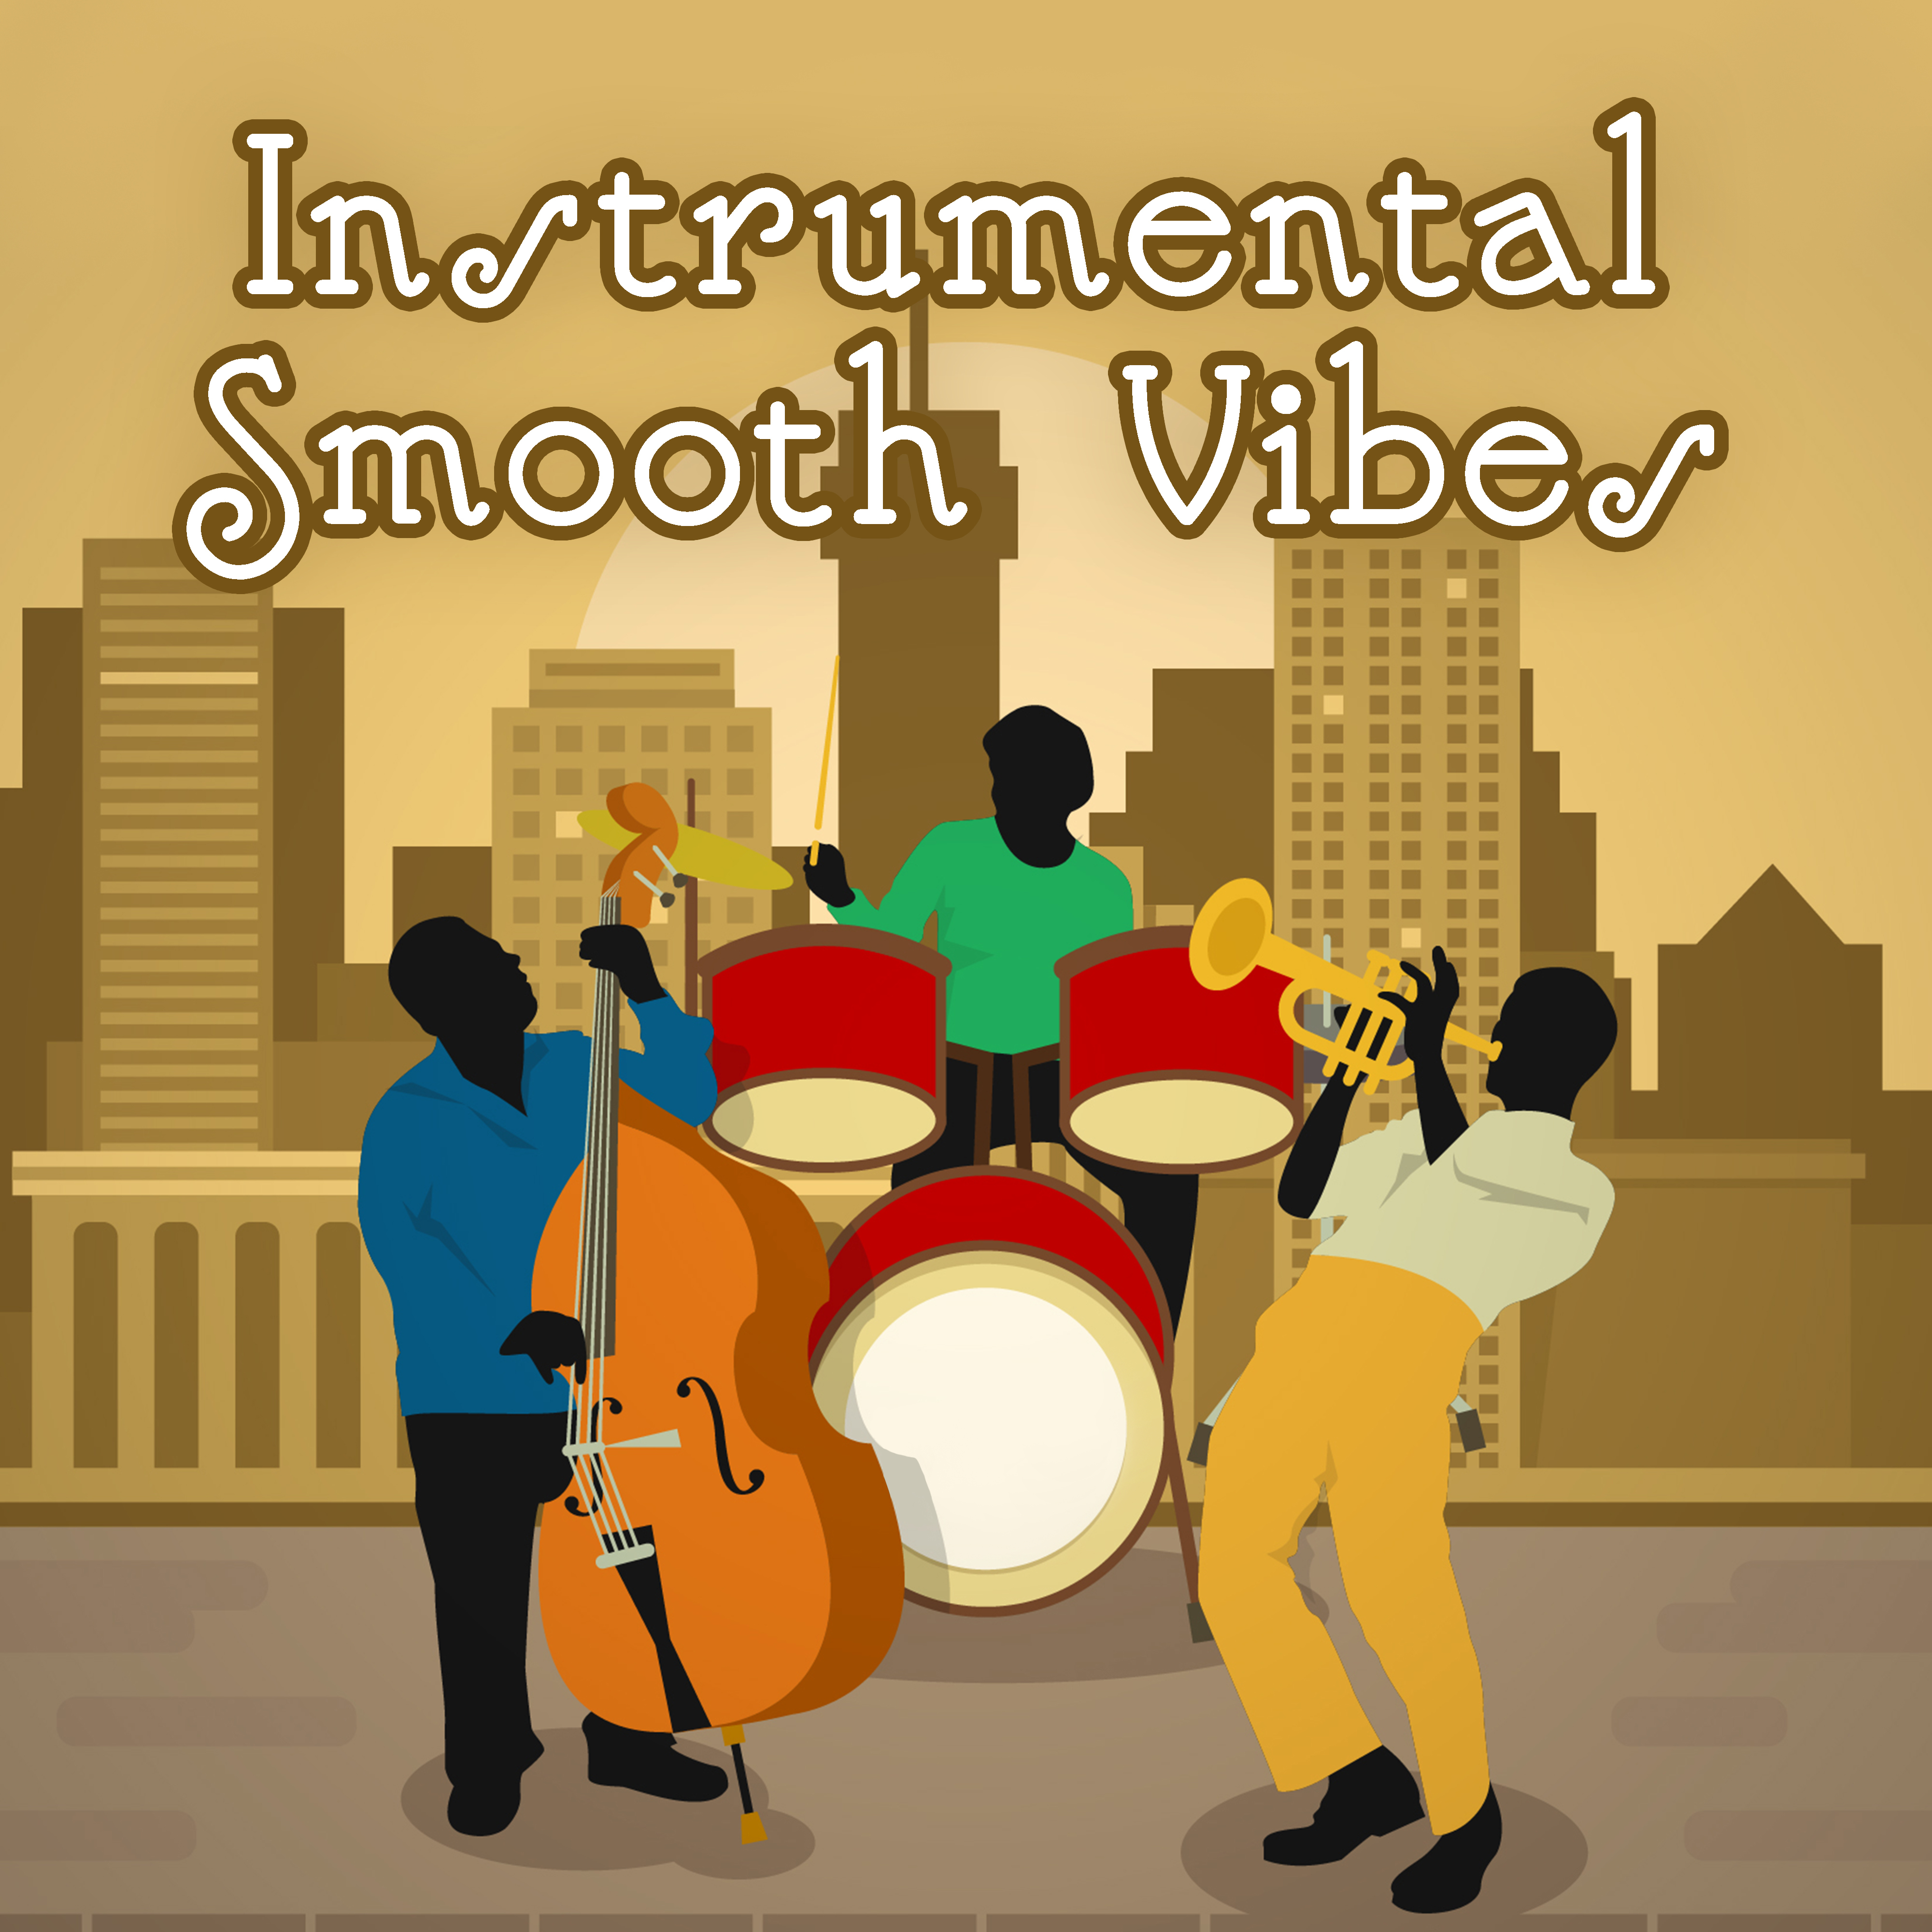 Instrumental Smooth Vibes